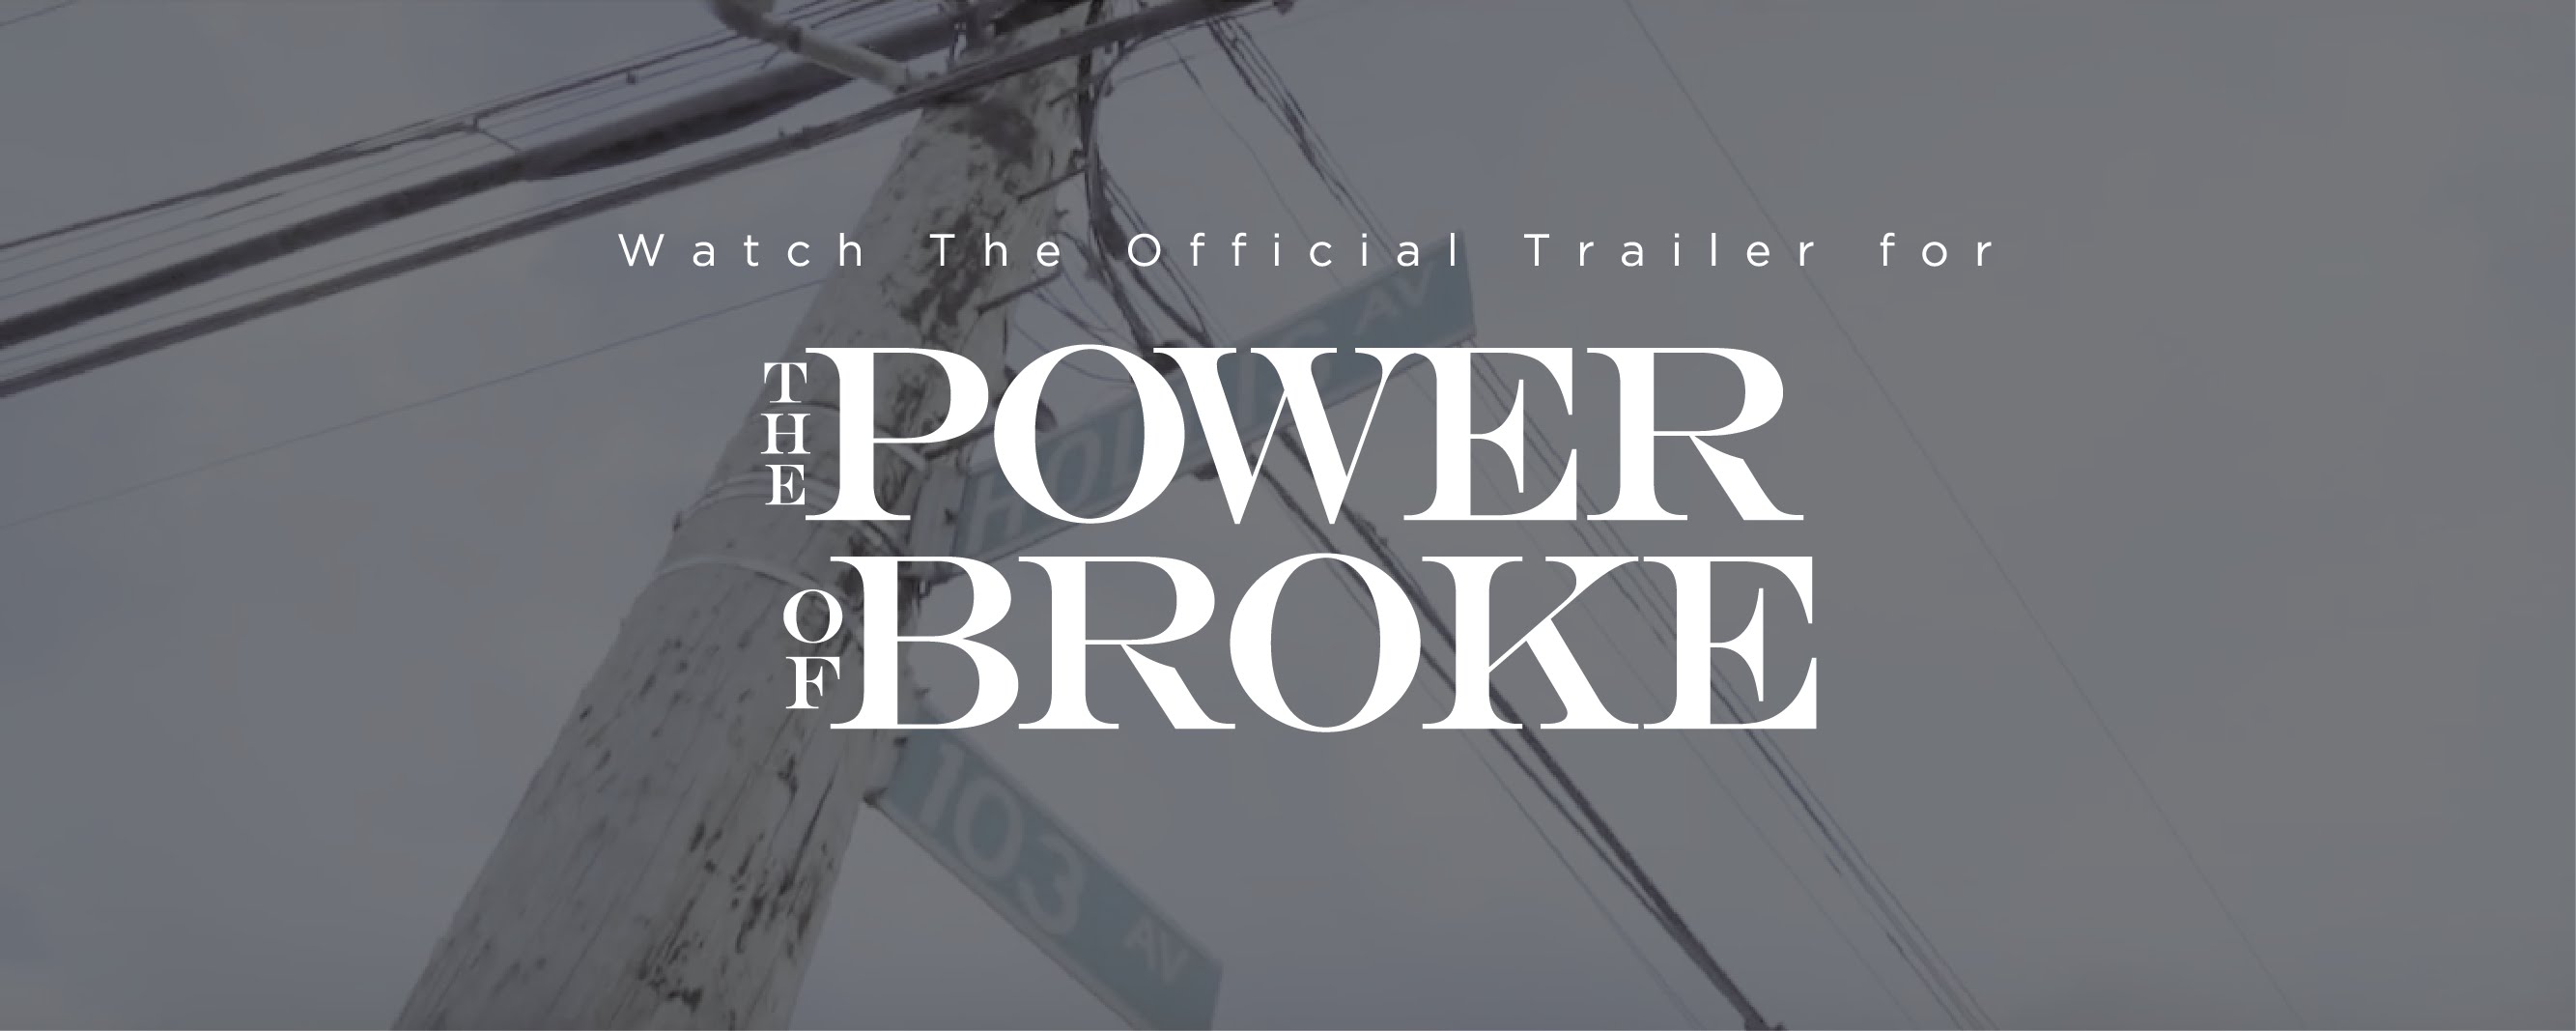 The Power Of Broke by Daymond John (Book Trailer)